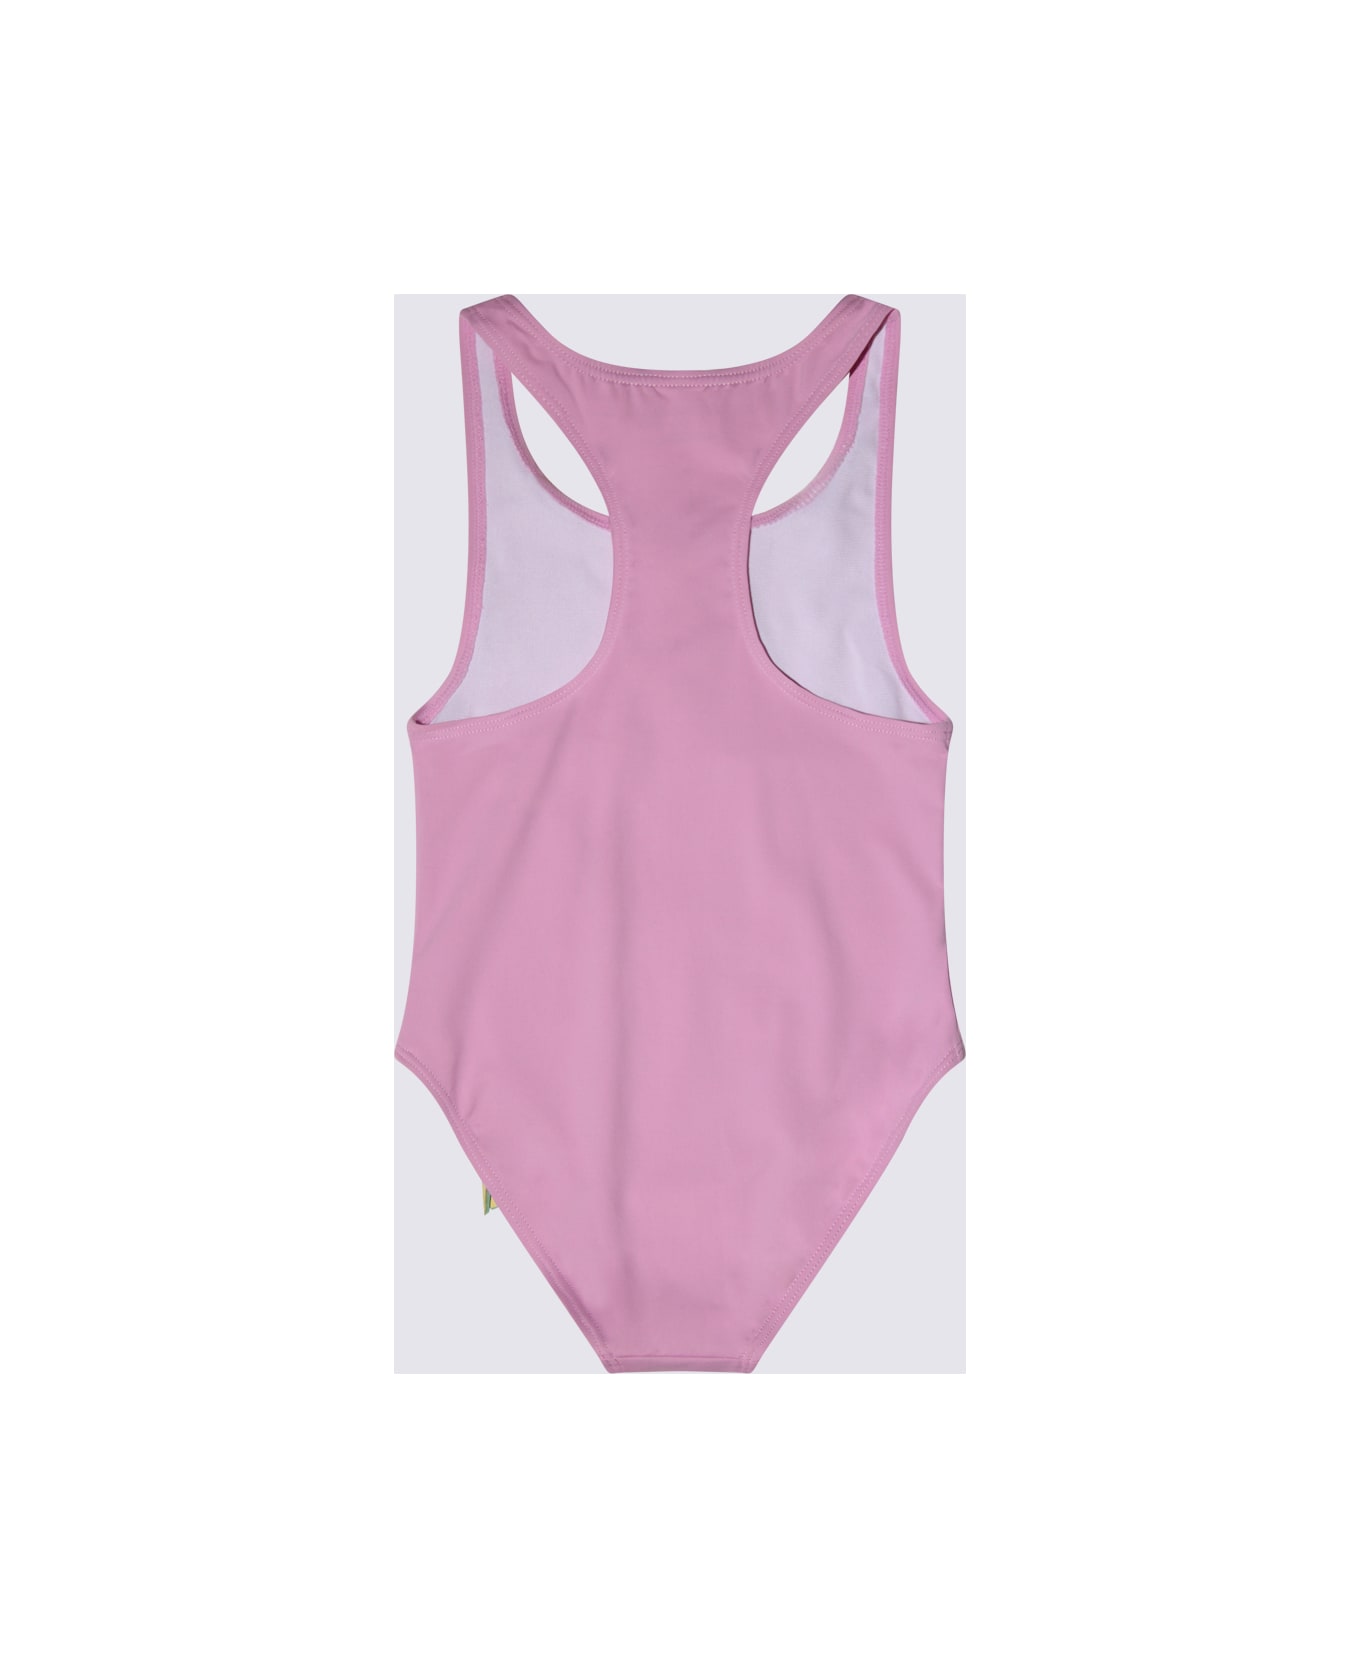 Stella McCartney Pink Multicolour Swimsuit - Pink 水着